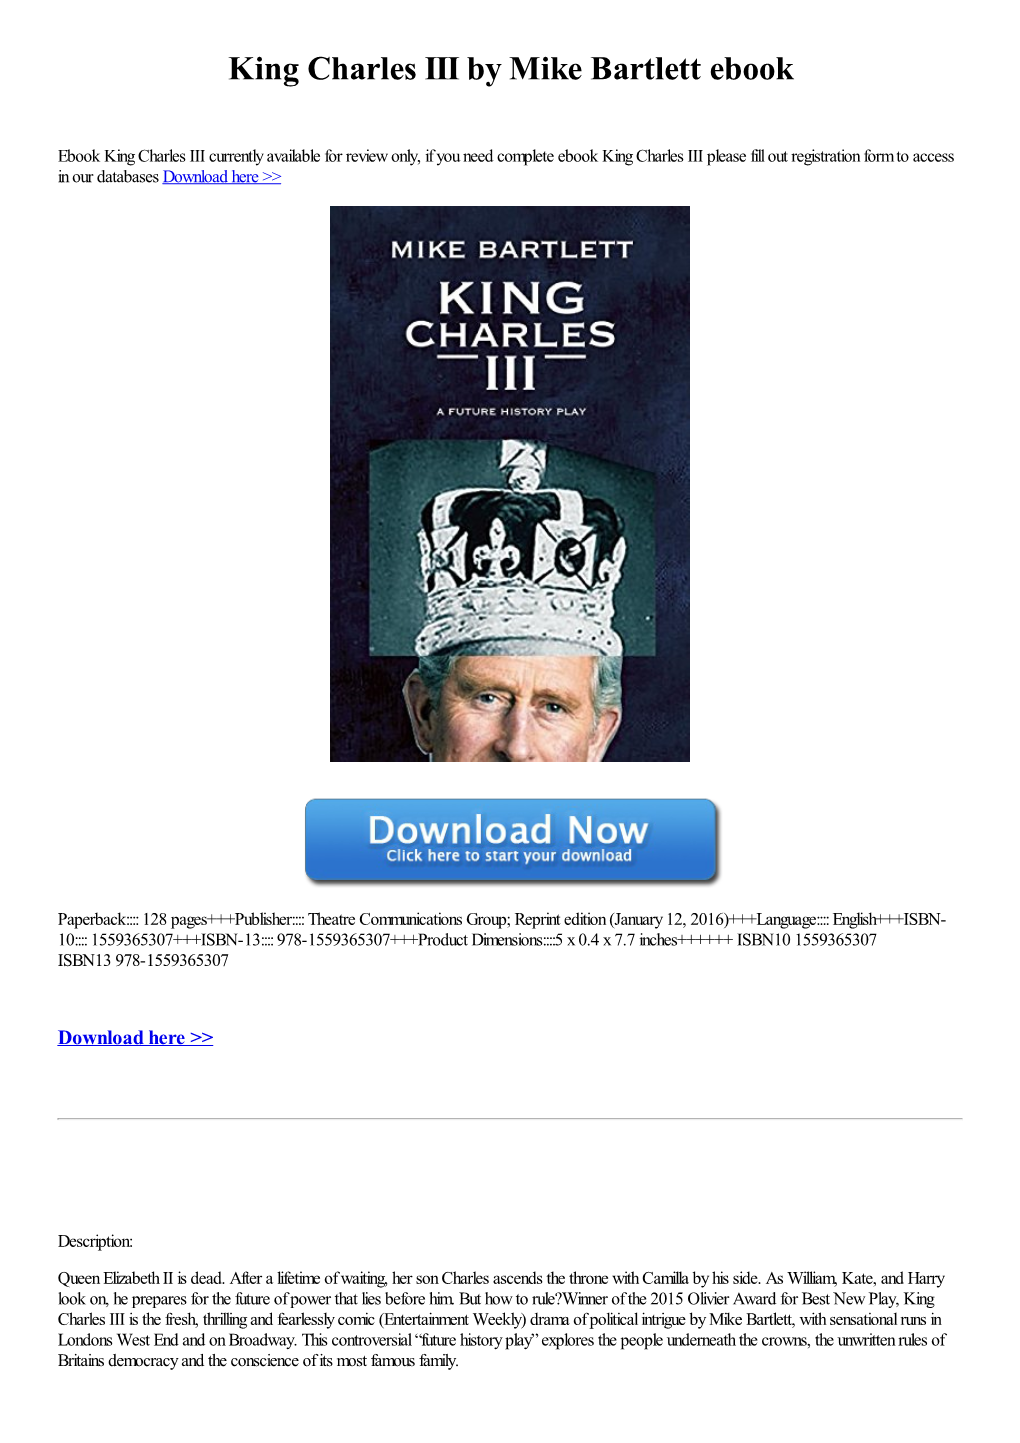 King Charles III by Mike Bartlett Ebook